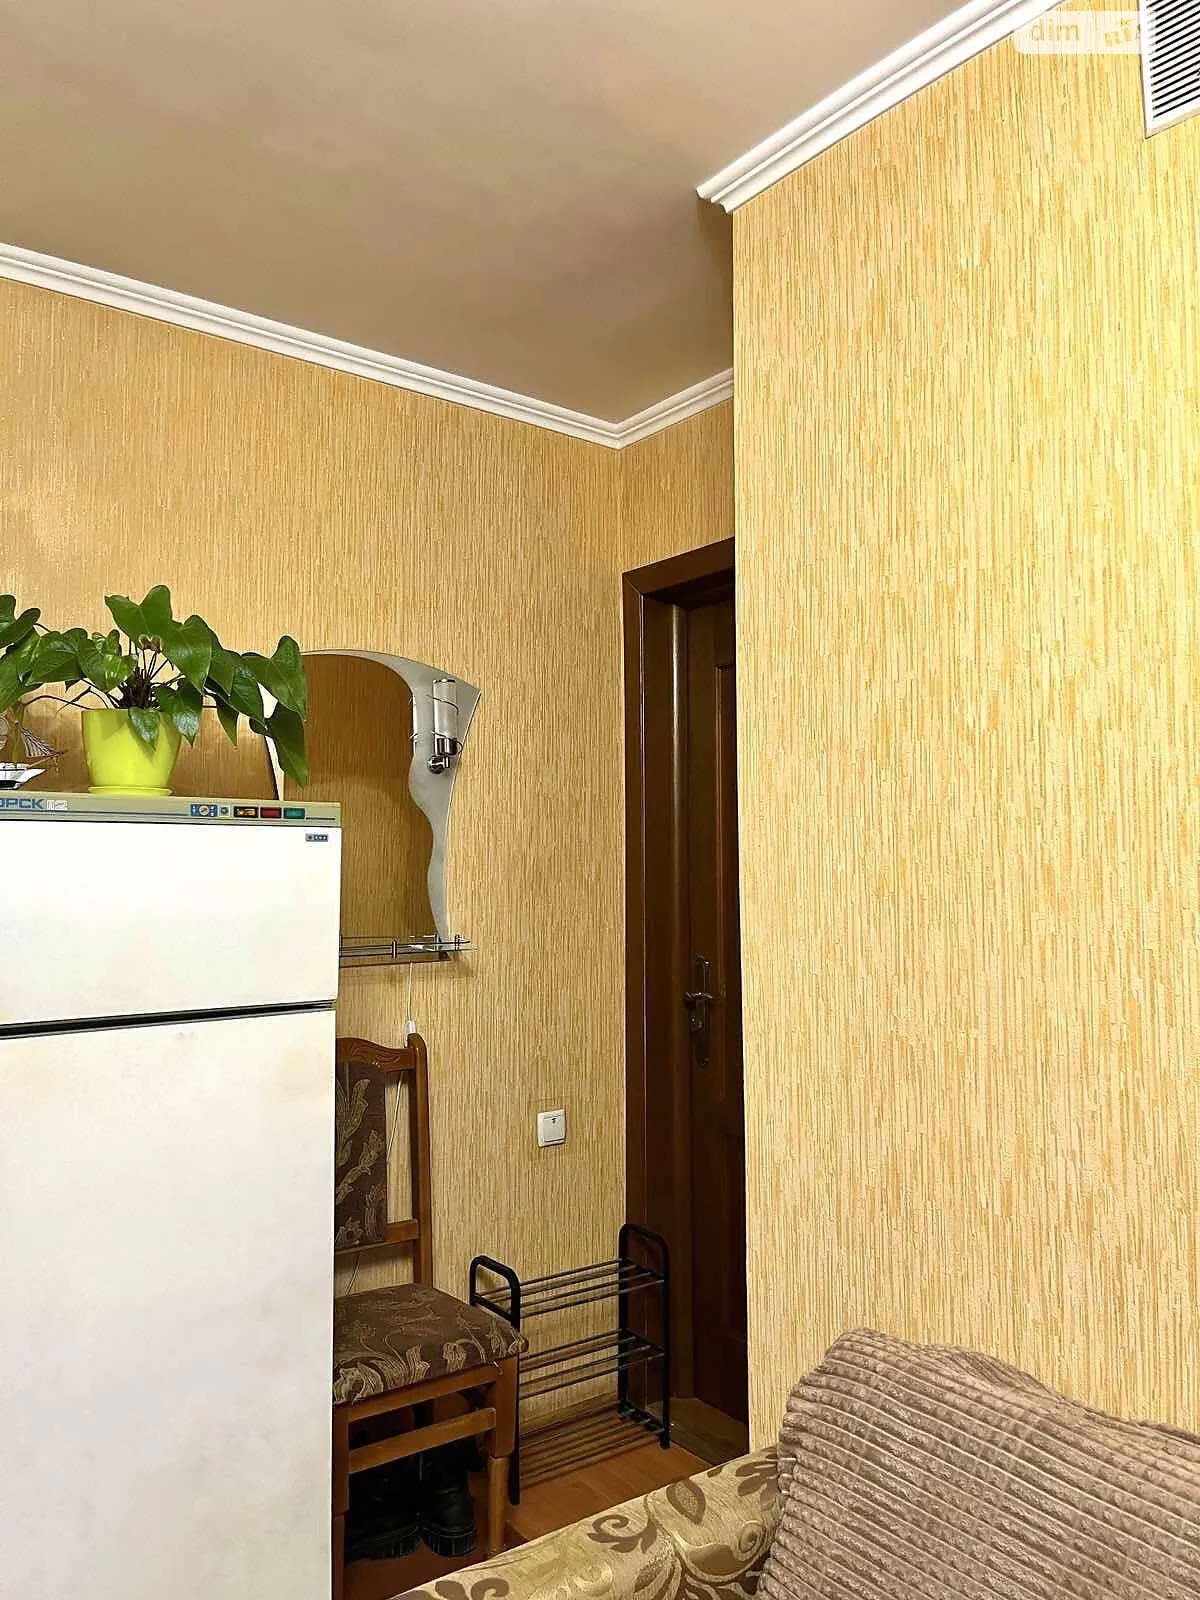 Продается комната 17 кв. м в Тернополе - фото 4